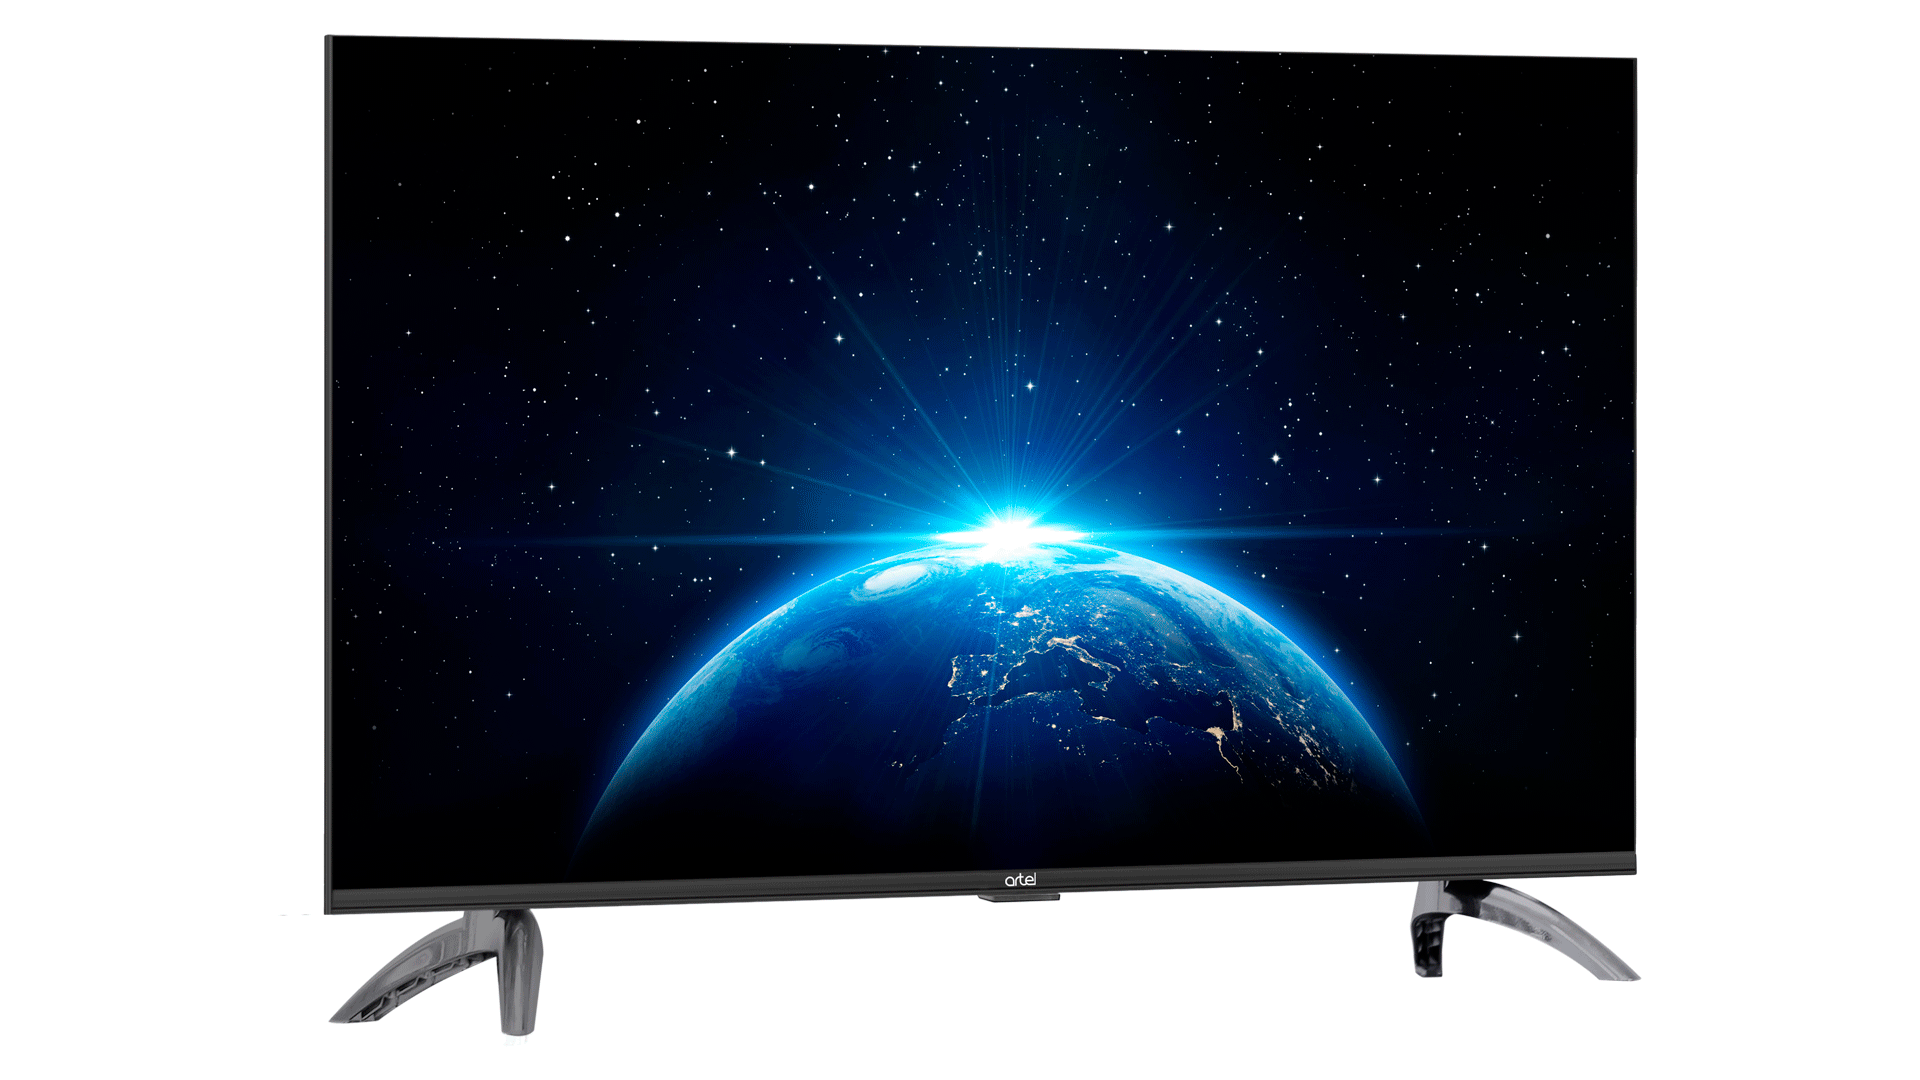 Телевизор Artel UA32H3200 Android Smart TV недорого